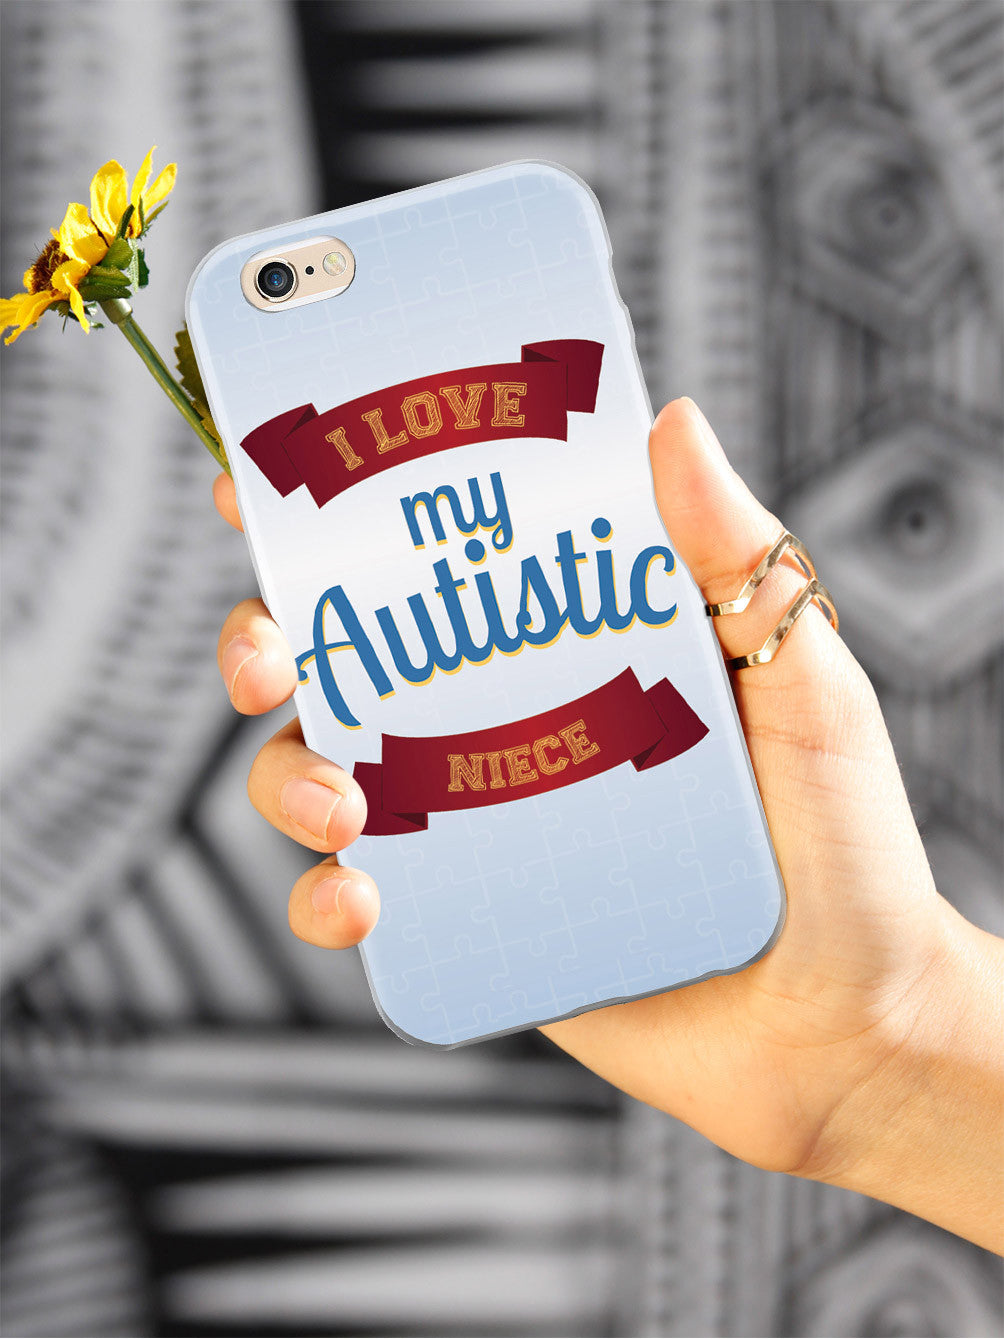 I Love my Autistic Niece - Autism Awareness Case